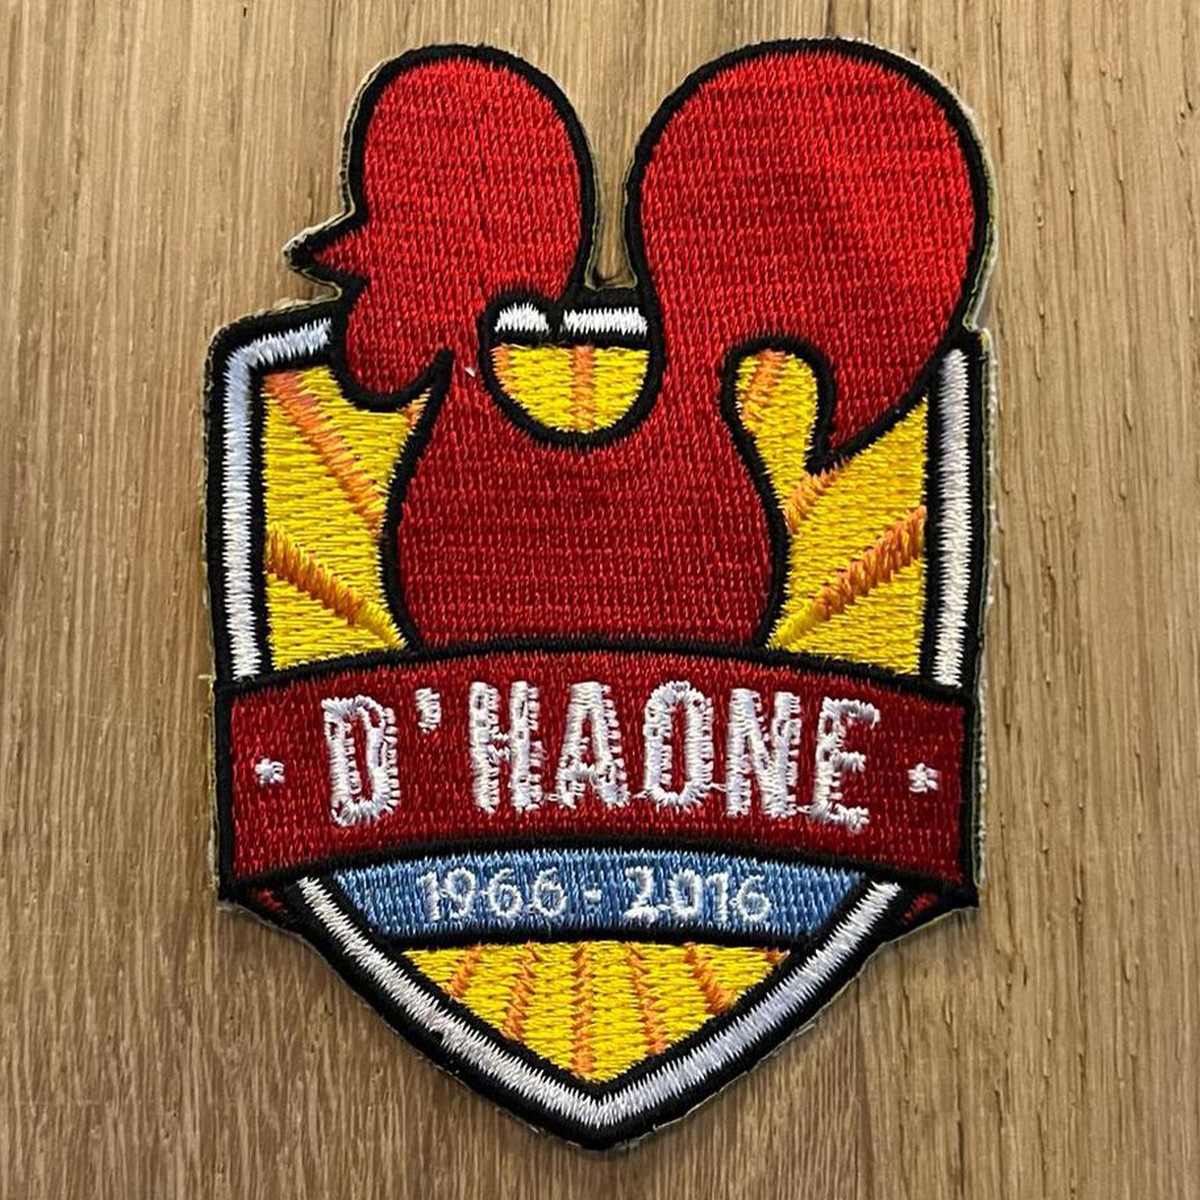 2016 D'Haone 1966 2016 etiketje